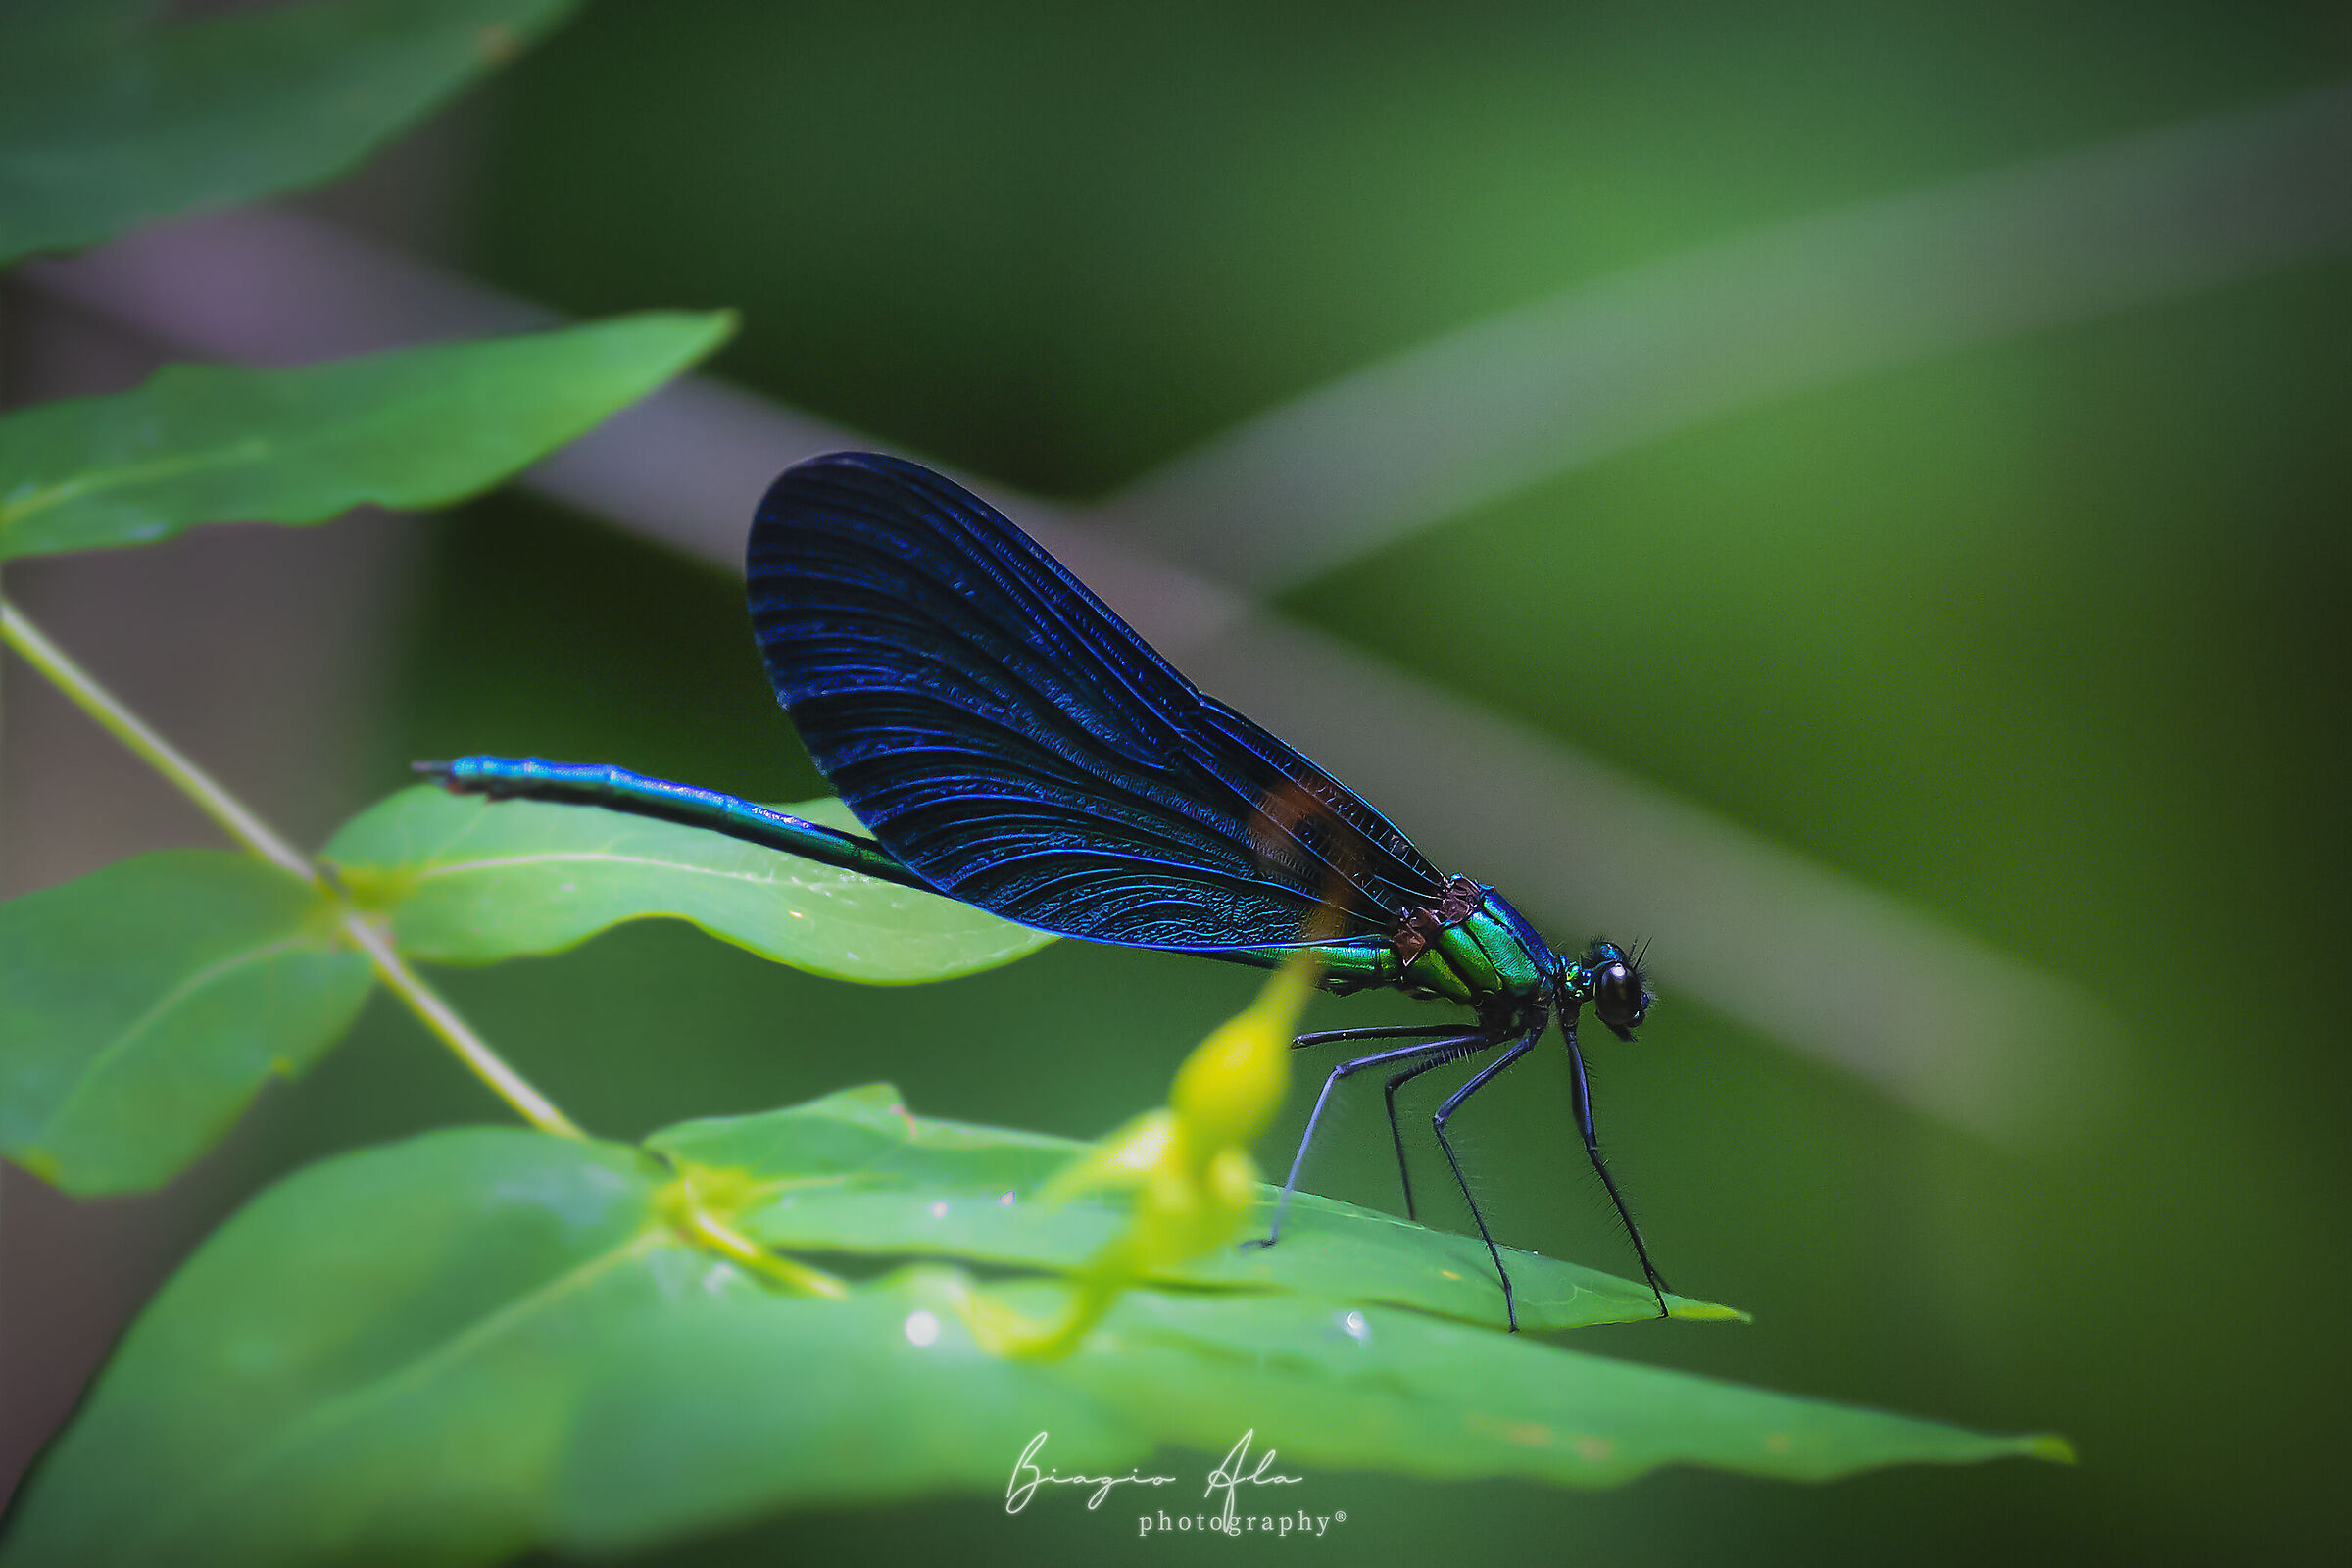 The Blue Dragonfly of San Fele (PZ)...